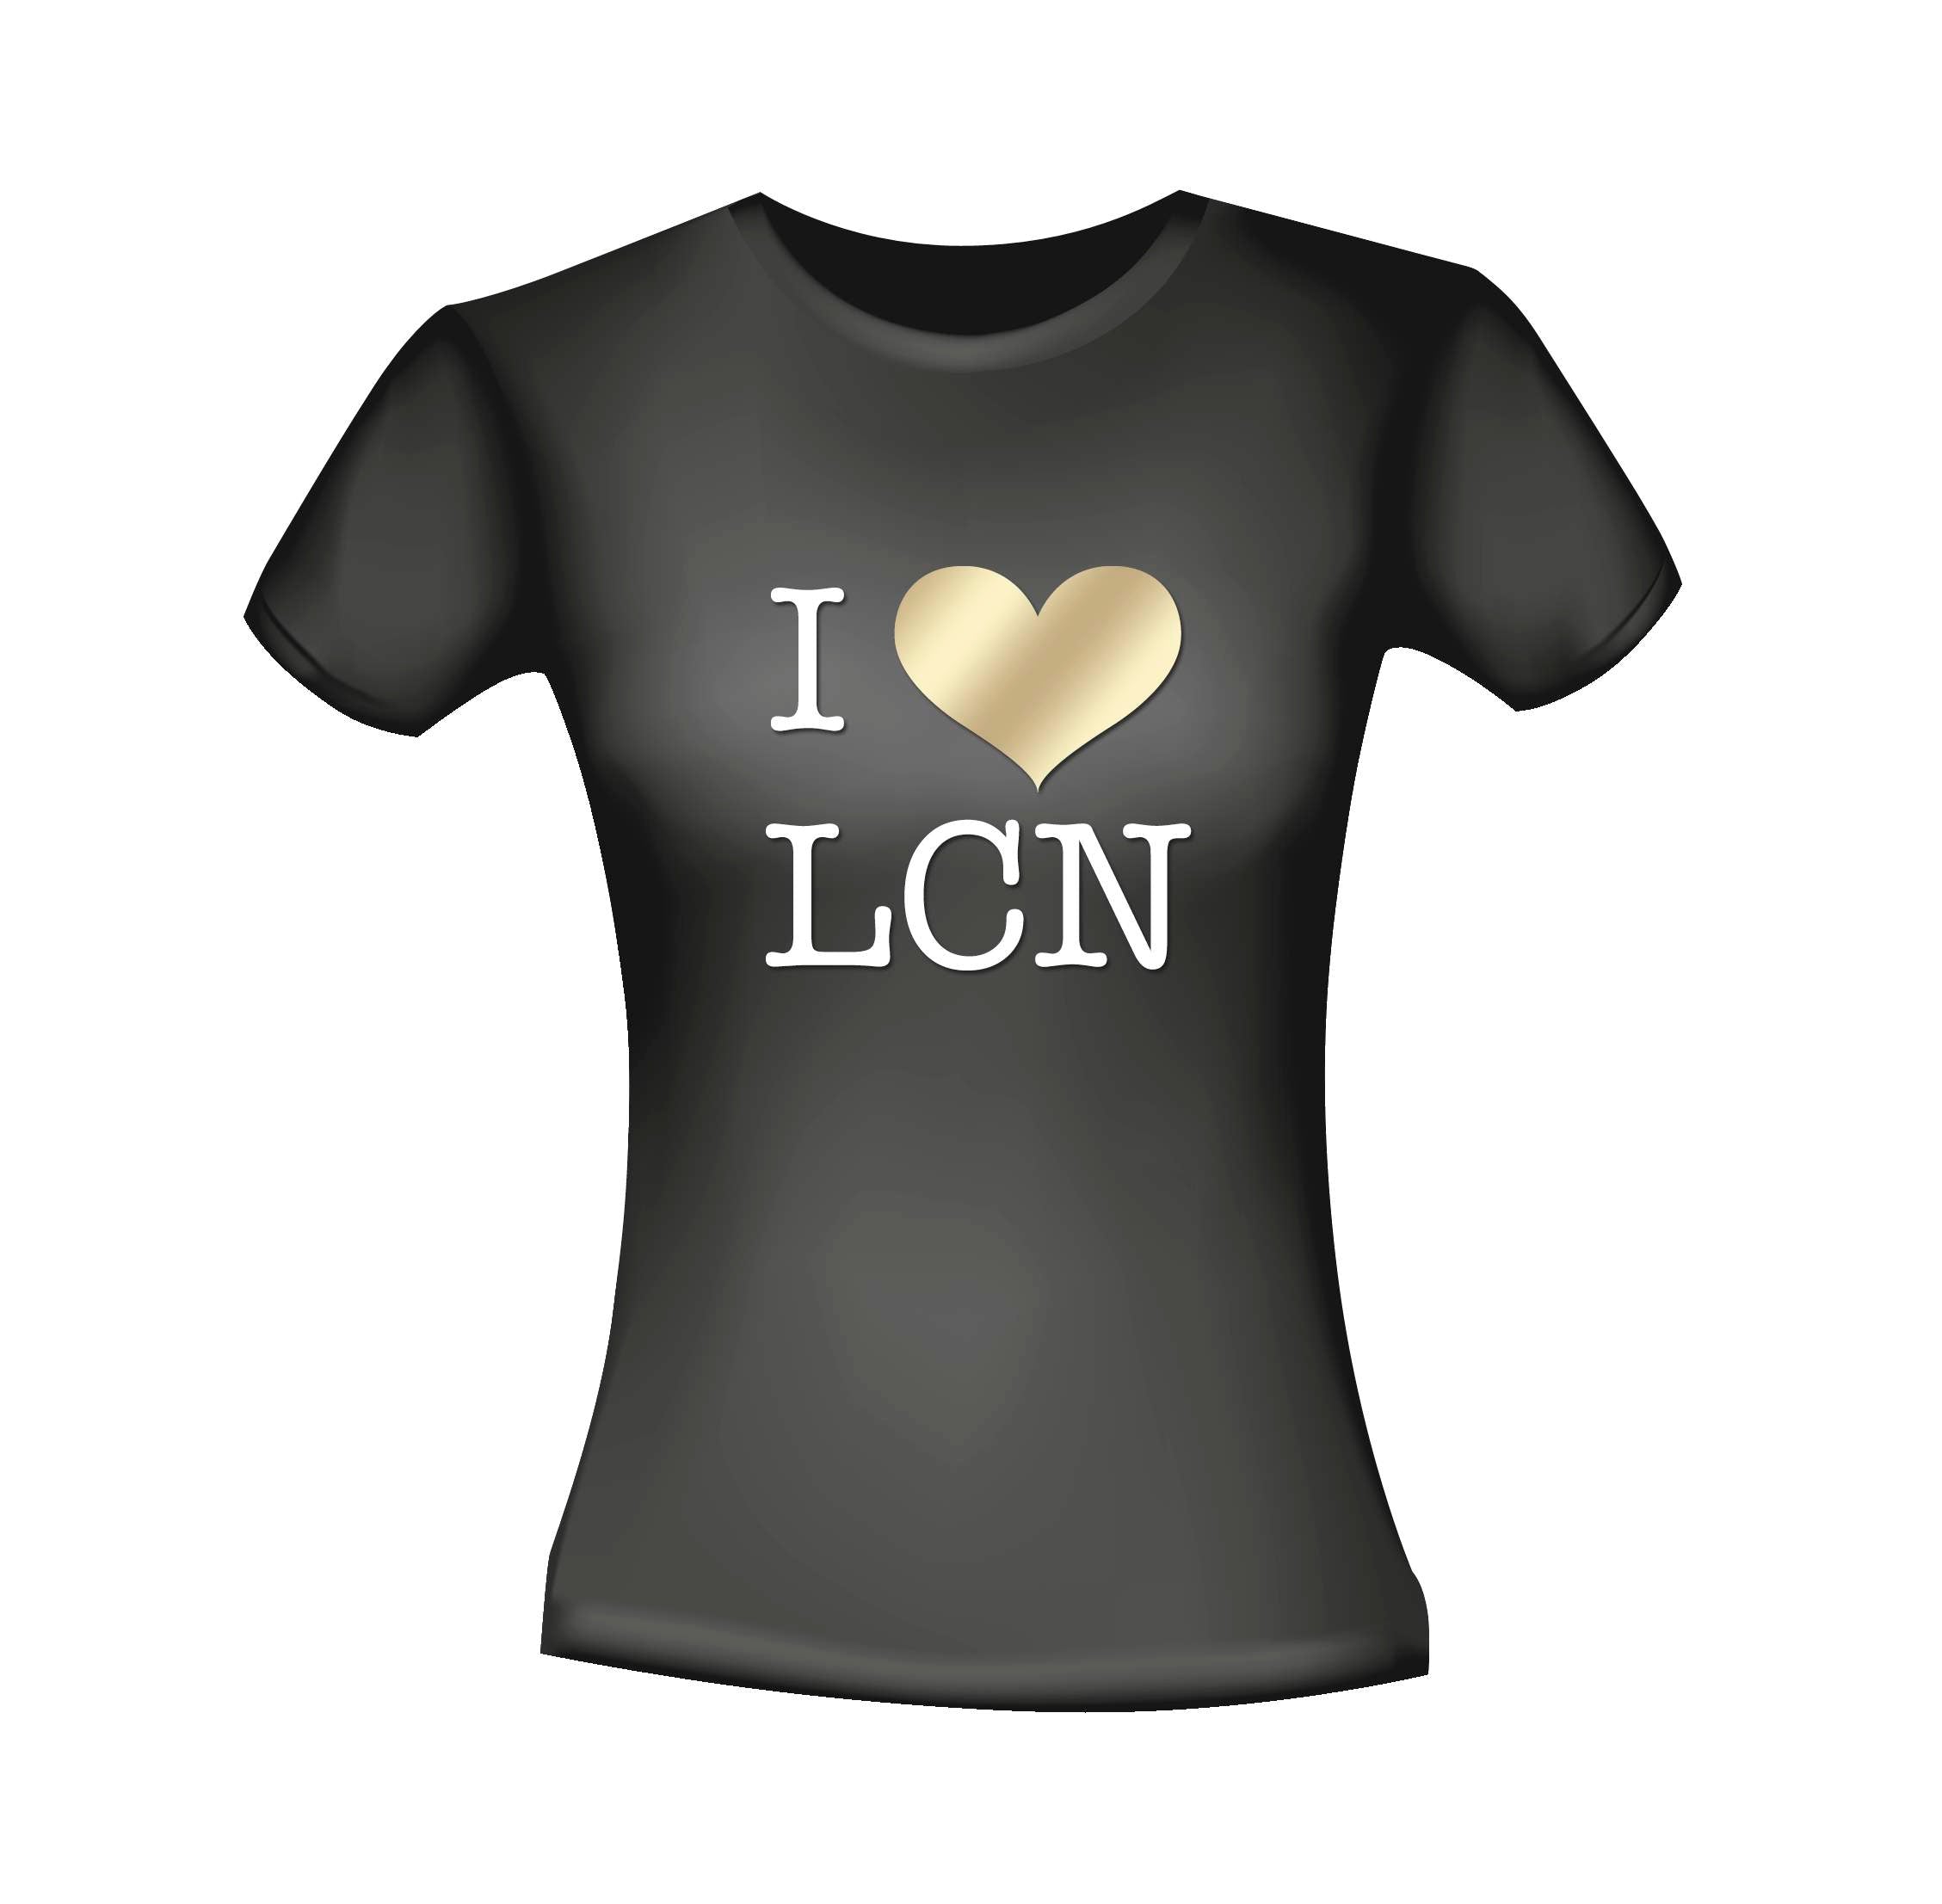 I love LCN black T-Shirt  XXXL*